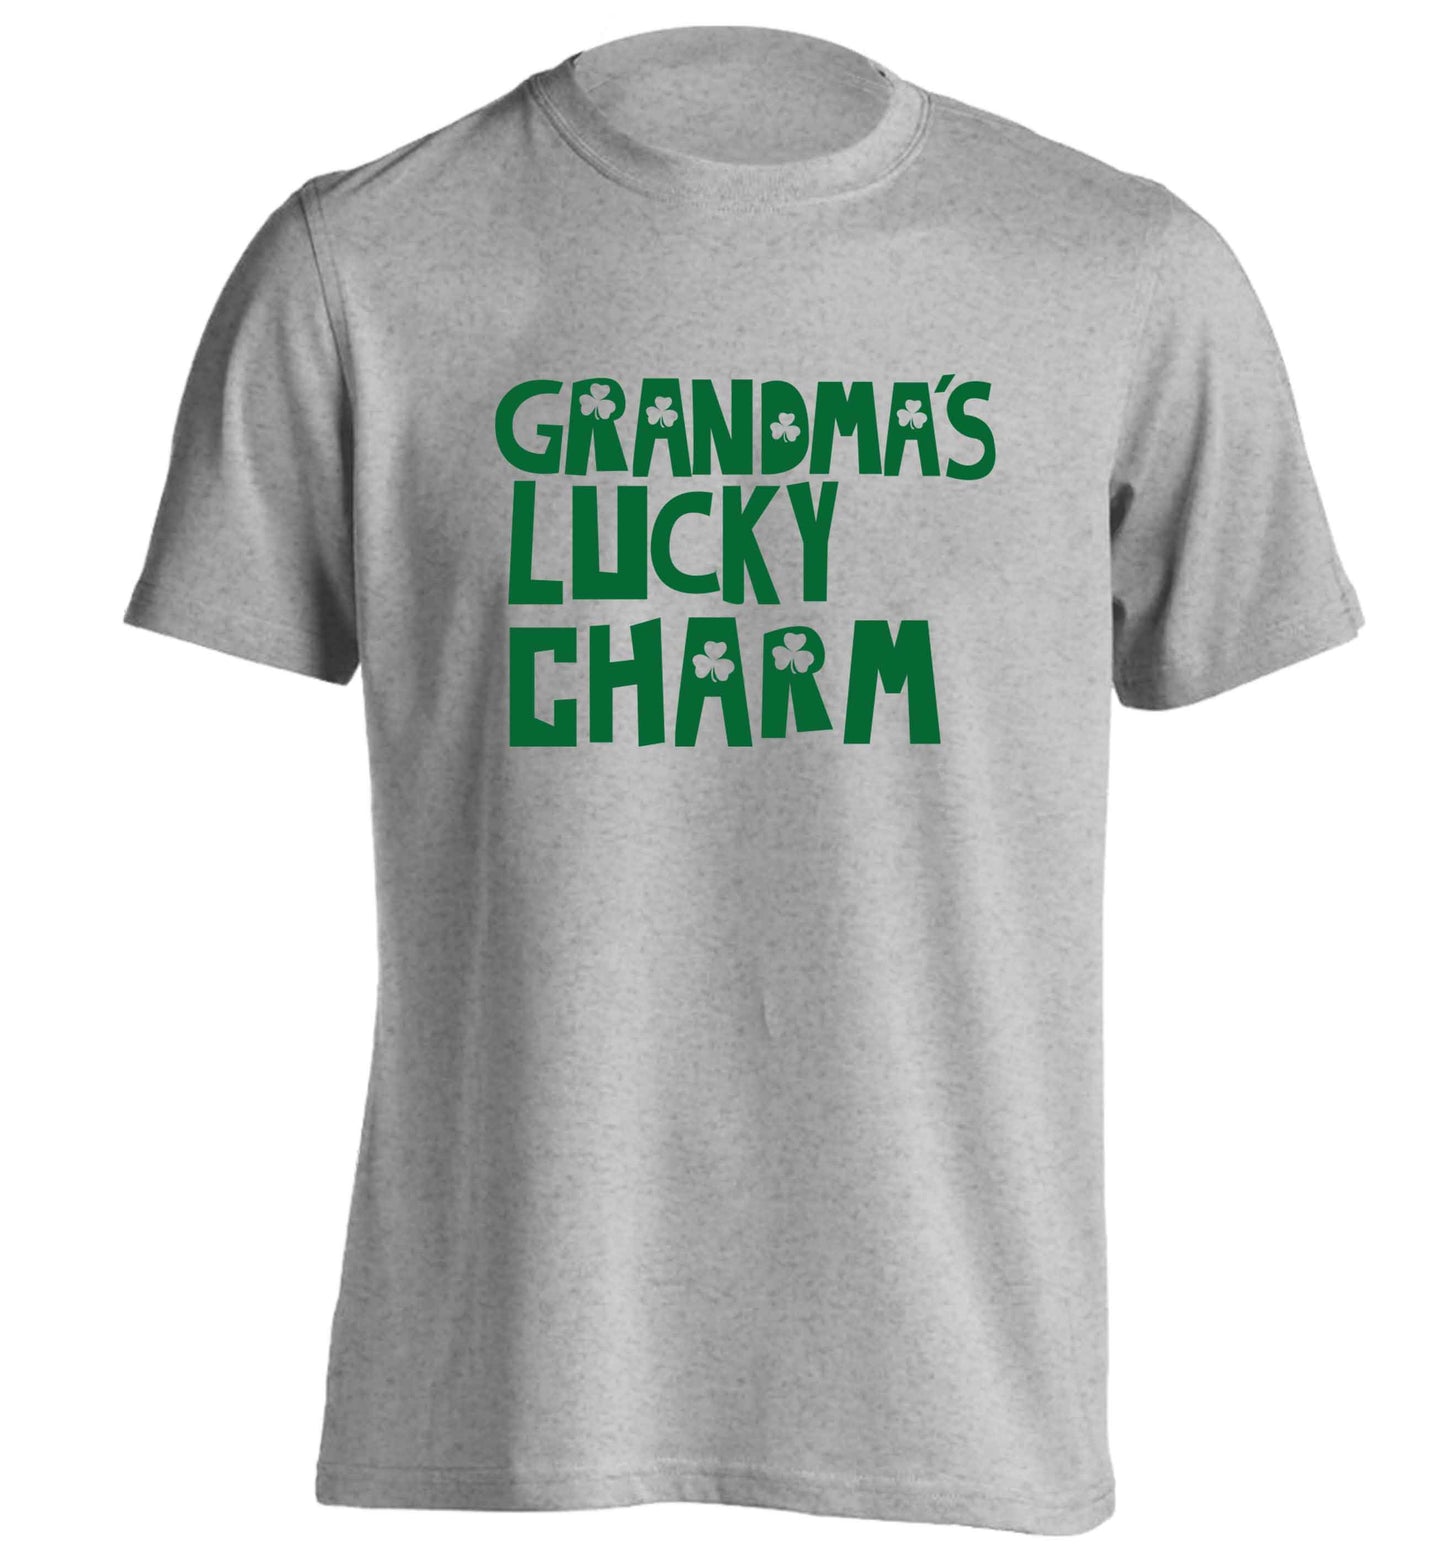 Grandma's lucky charm adults unisex grey Tshirt 2XL